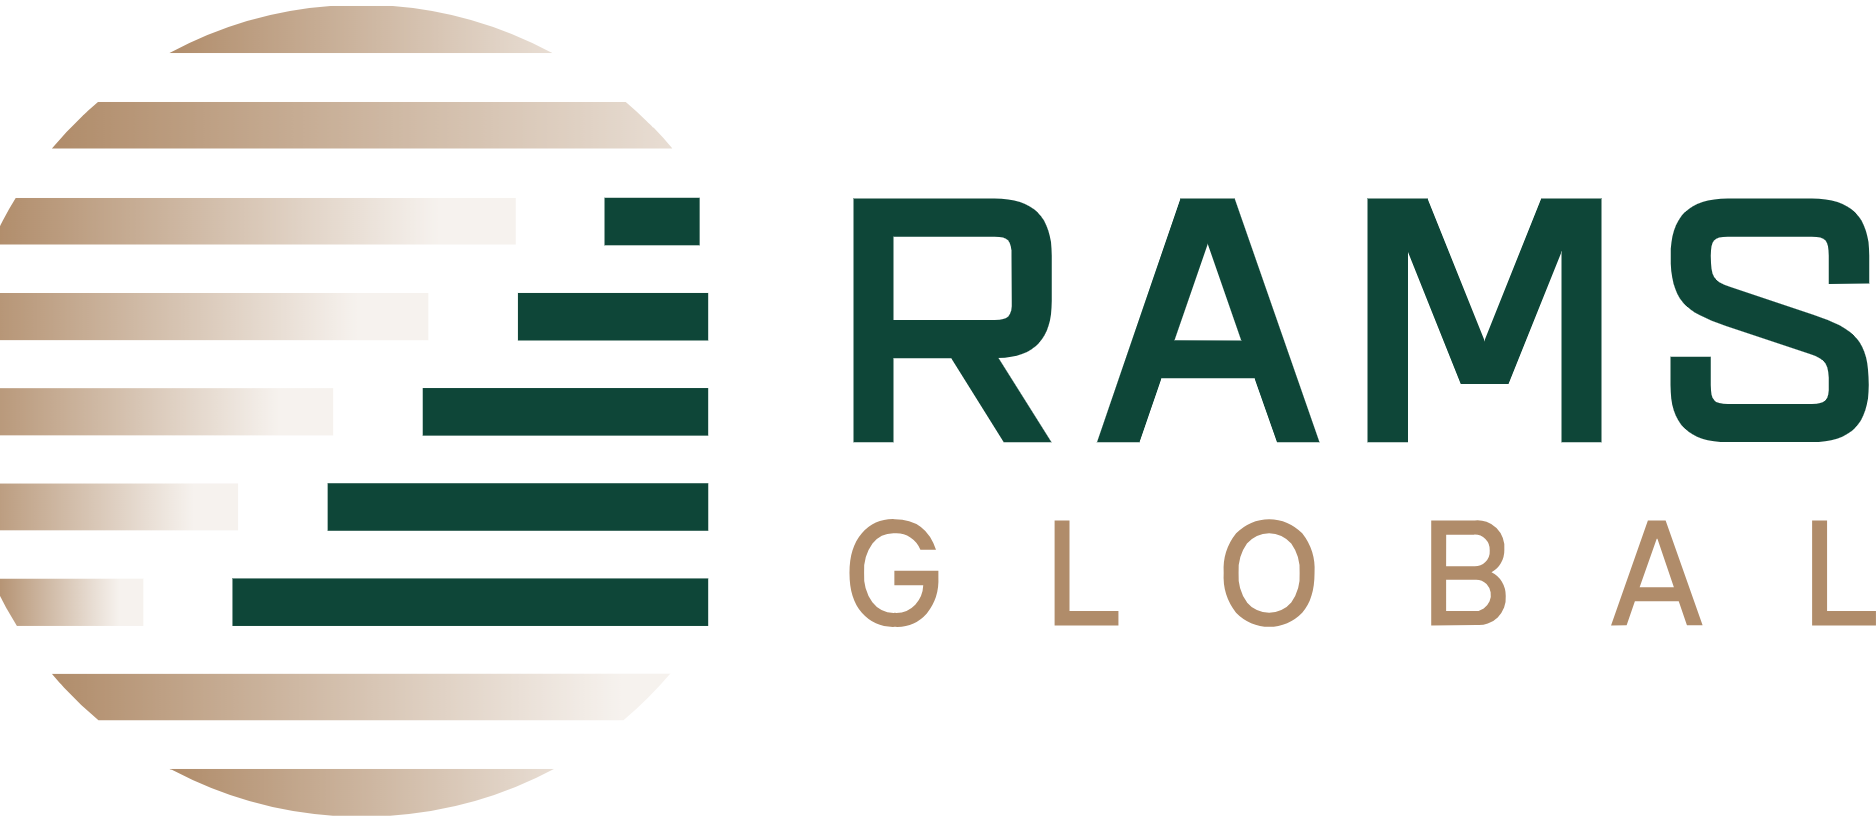 Rams Global Logo